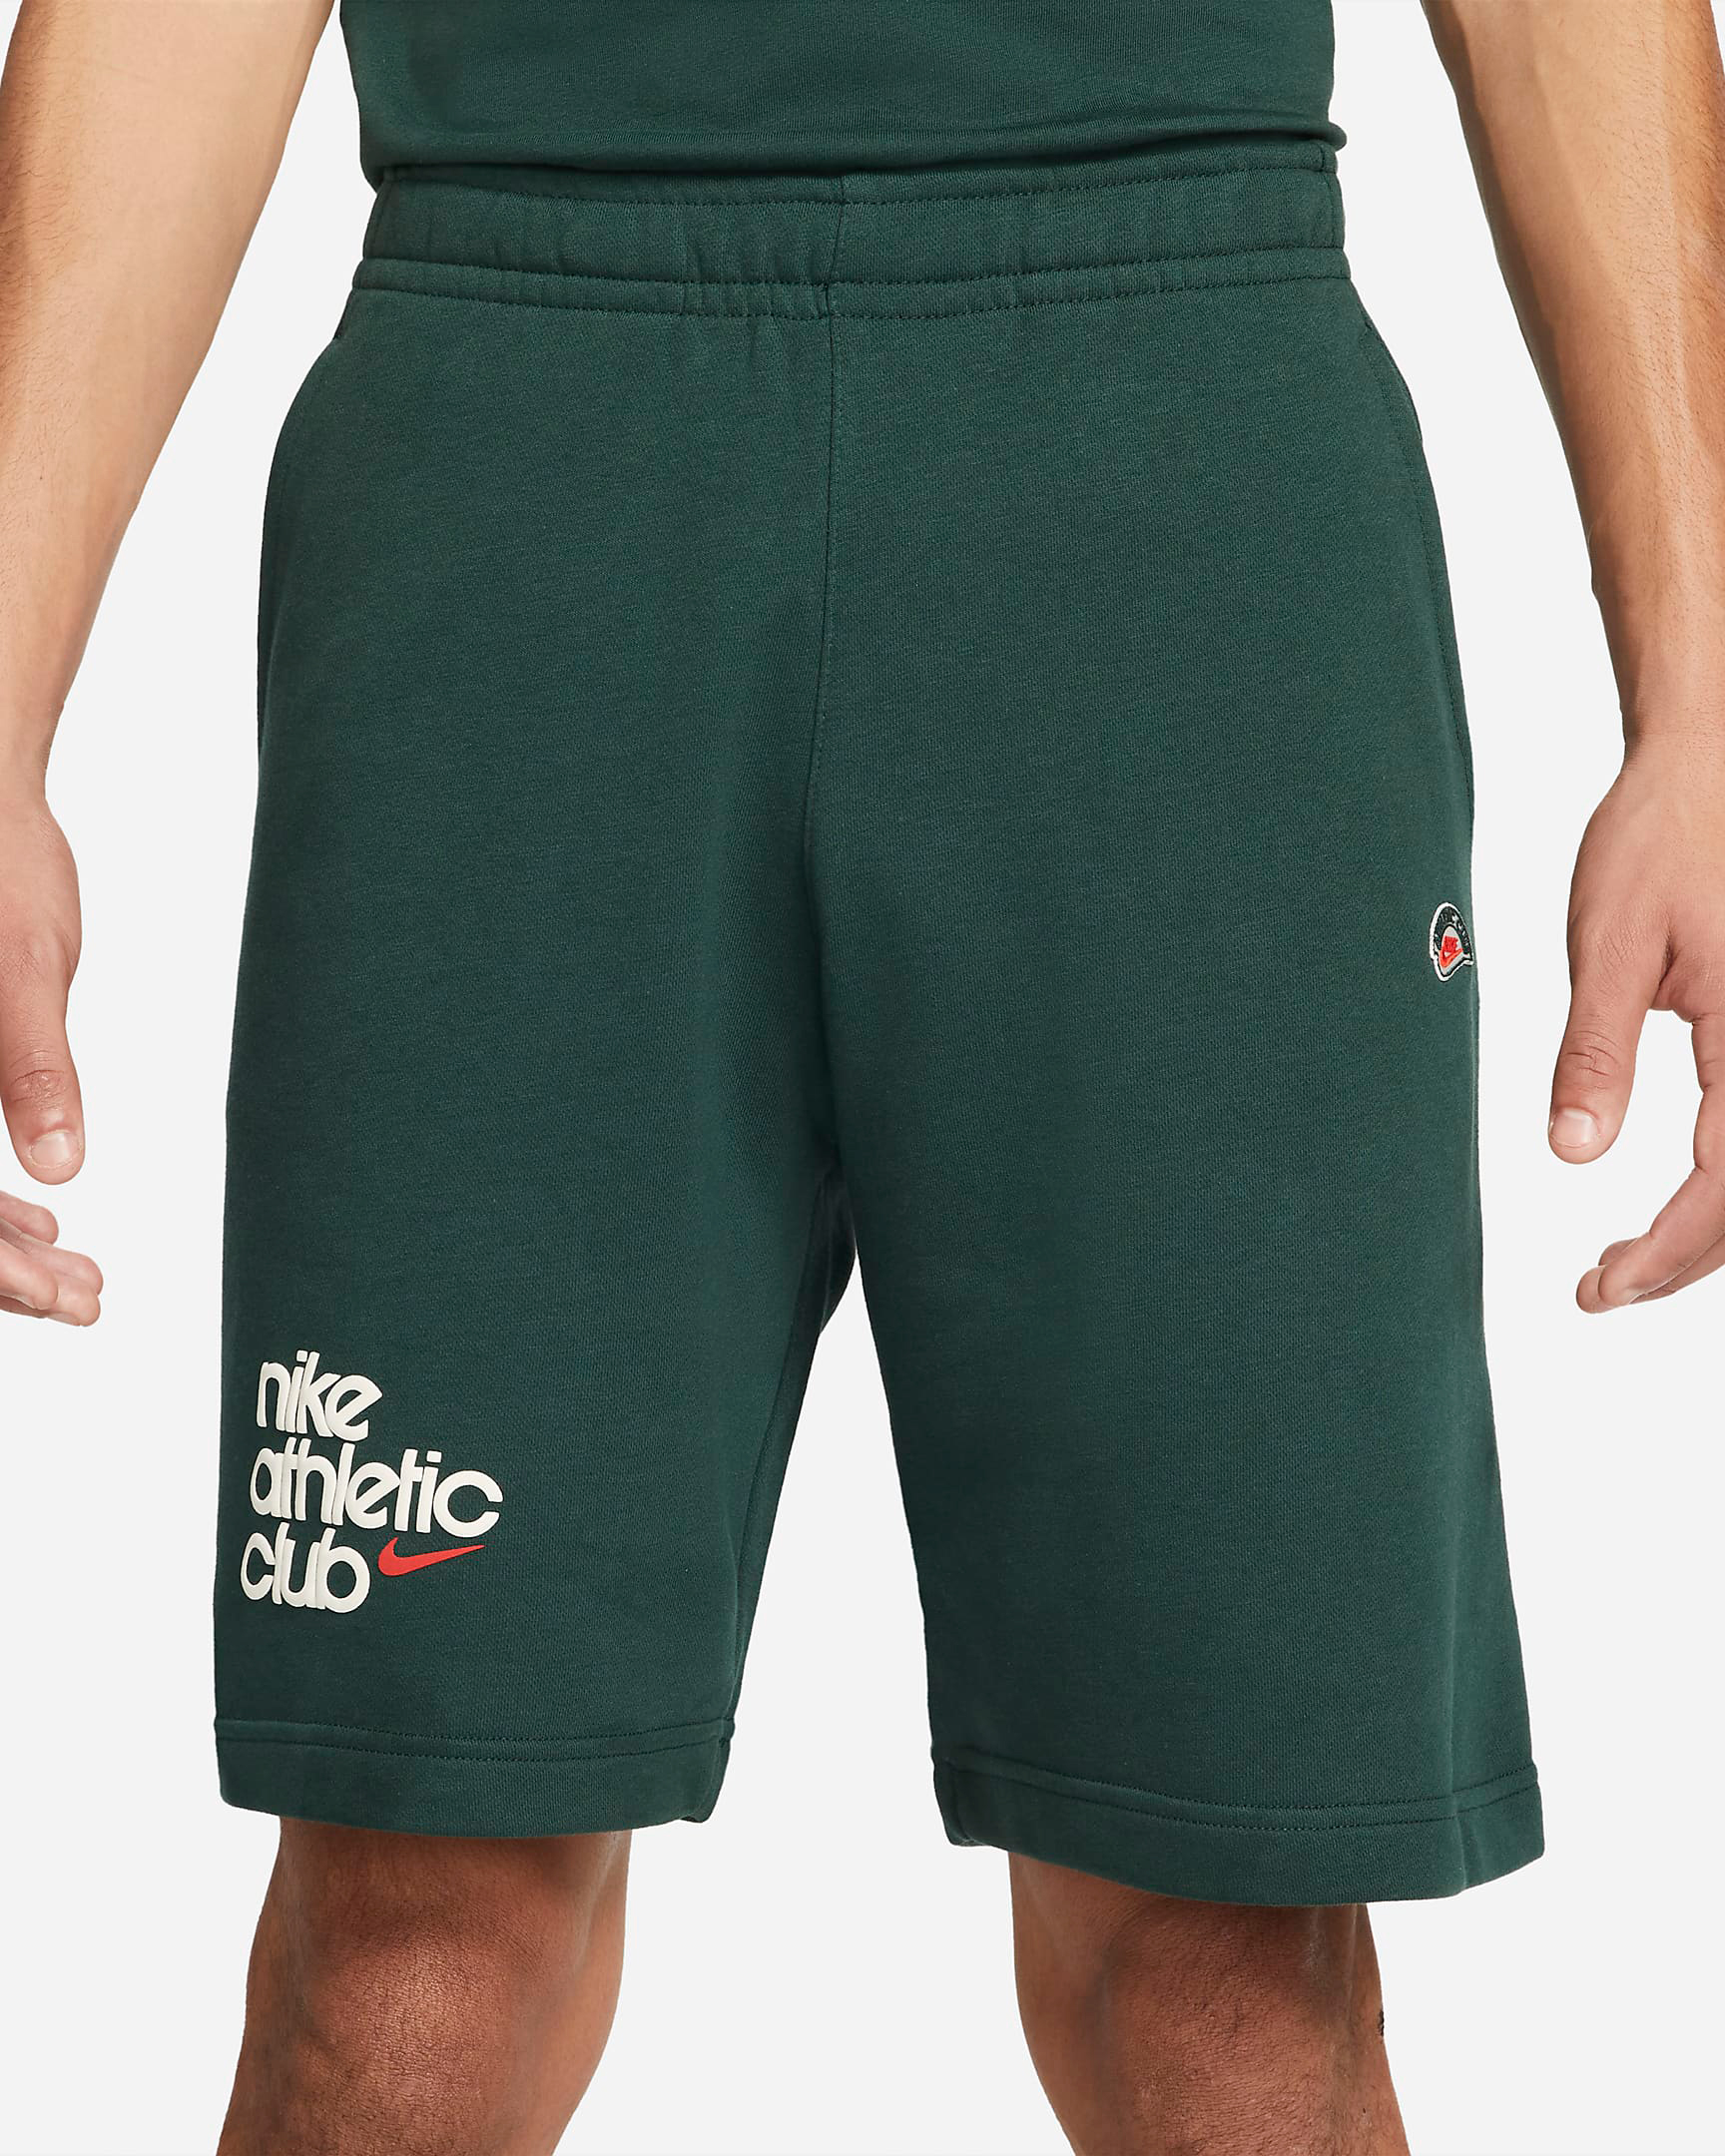 nike-athletic-club-shorts-pro-green